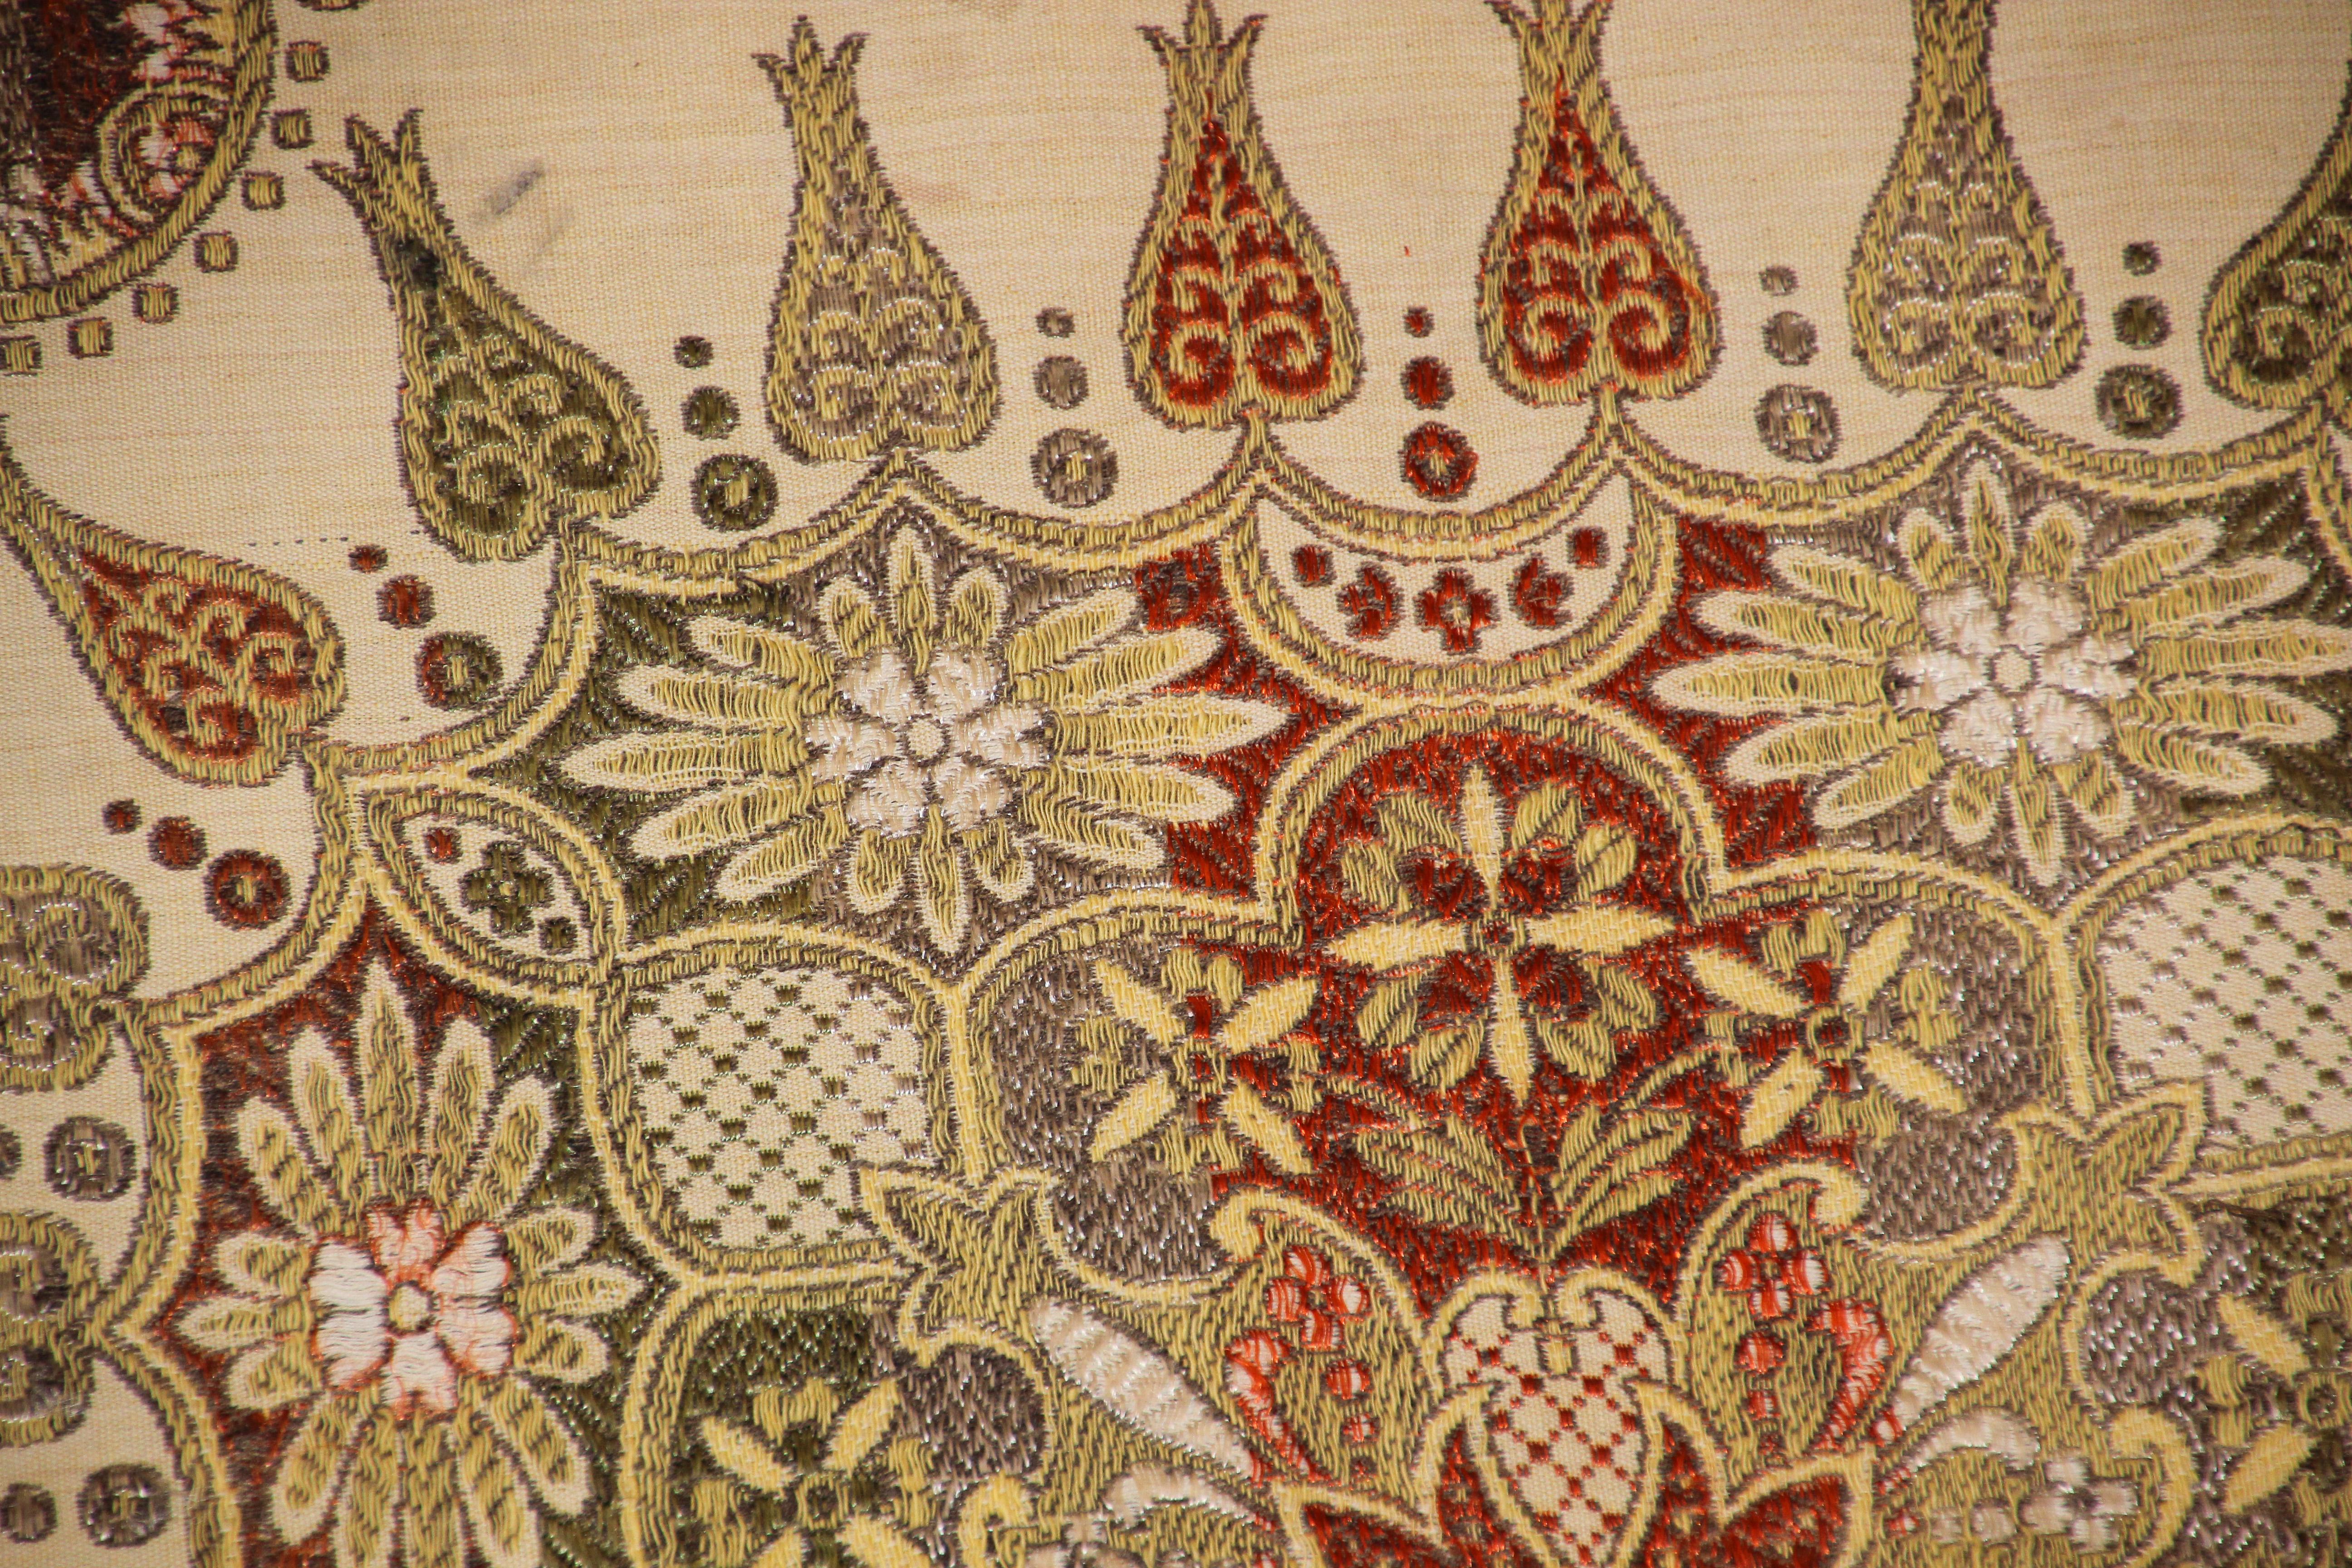 Antique Granada Moorish Textile with Arabic Calligraphy Writing 1